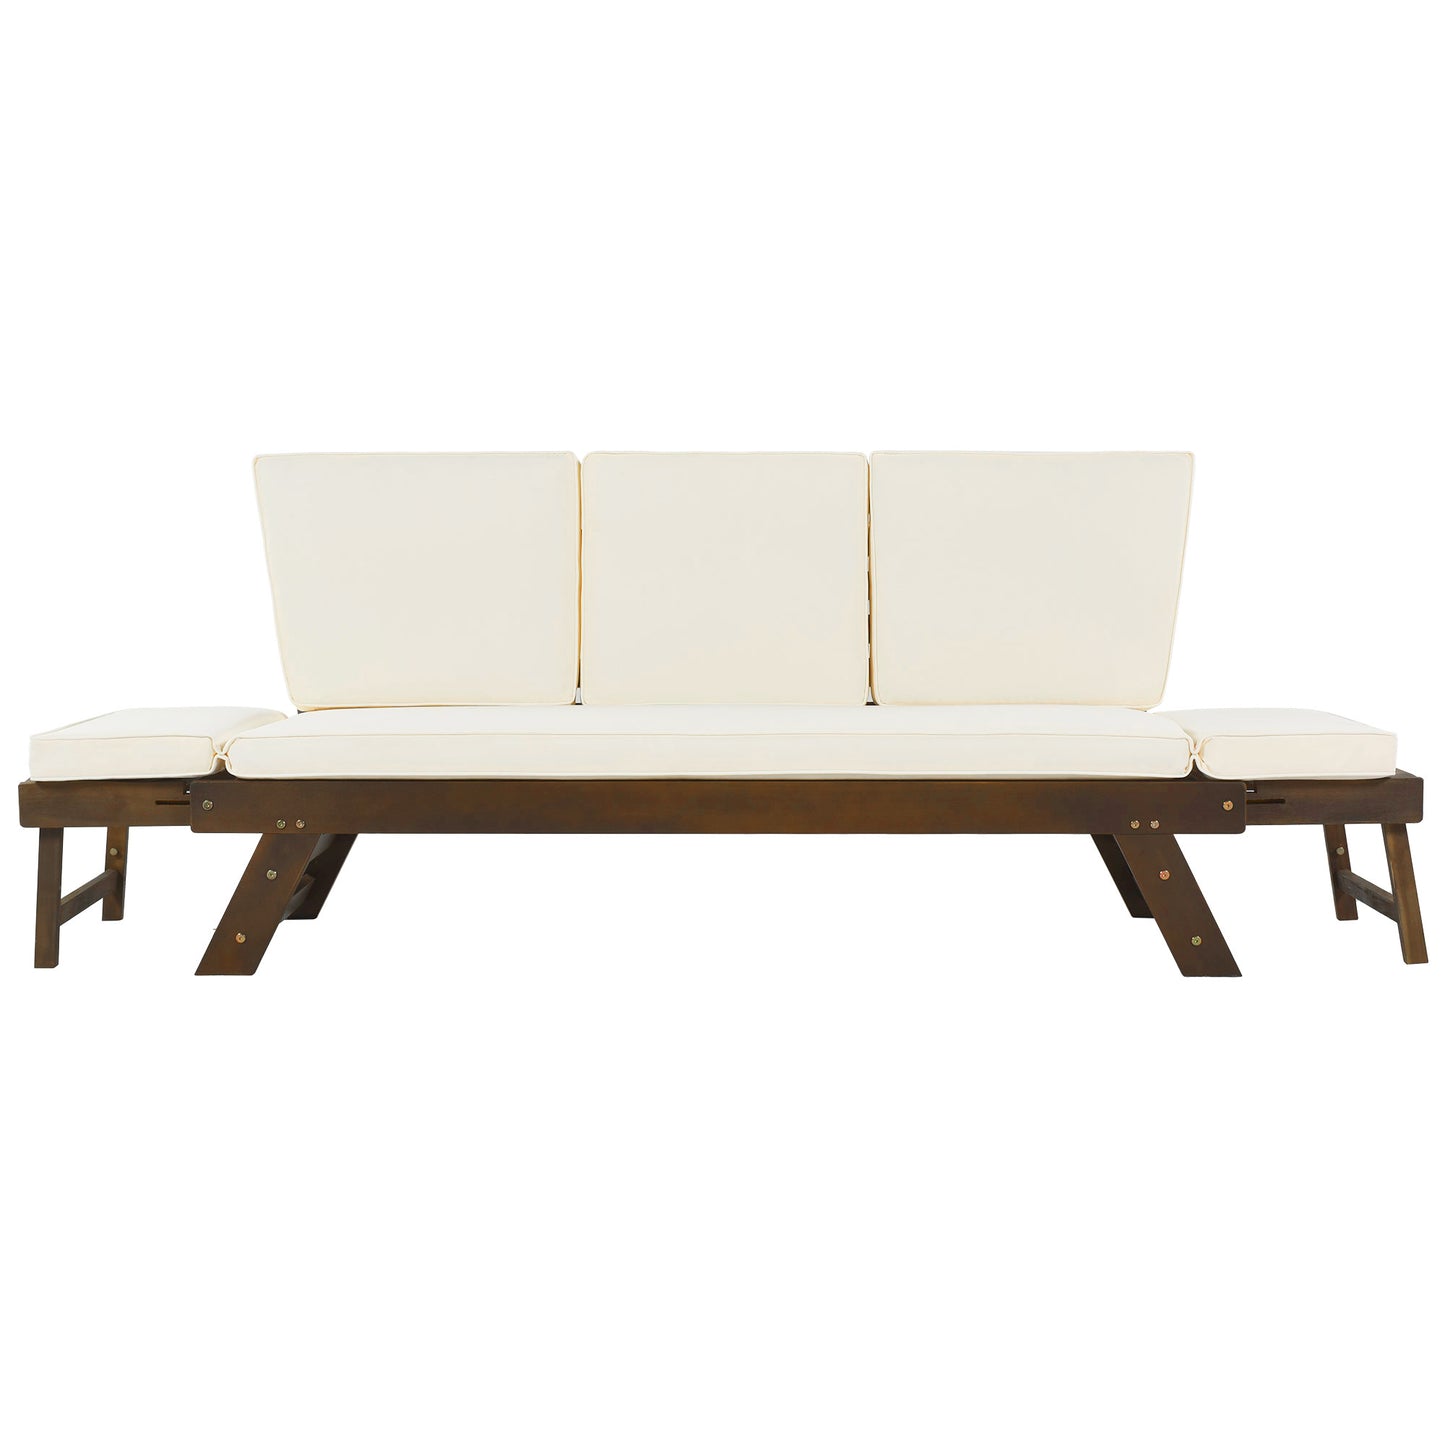 Outdoor Adjustable Patio Wooden Daybed Sofa